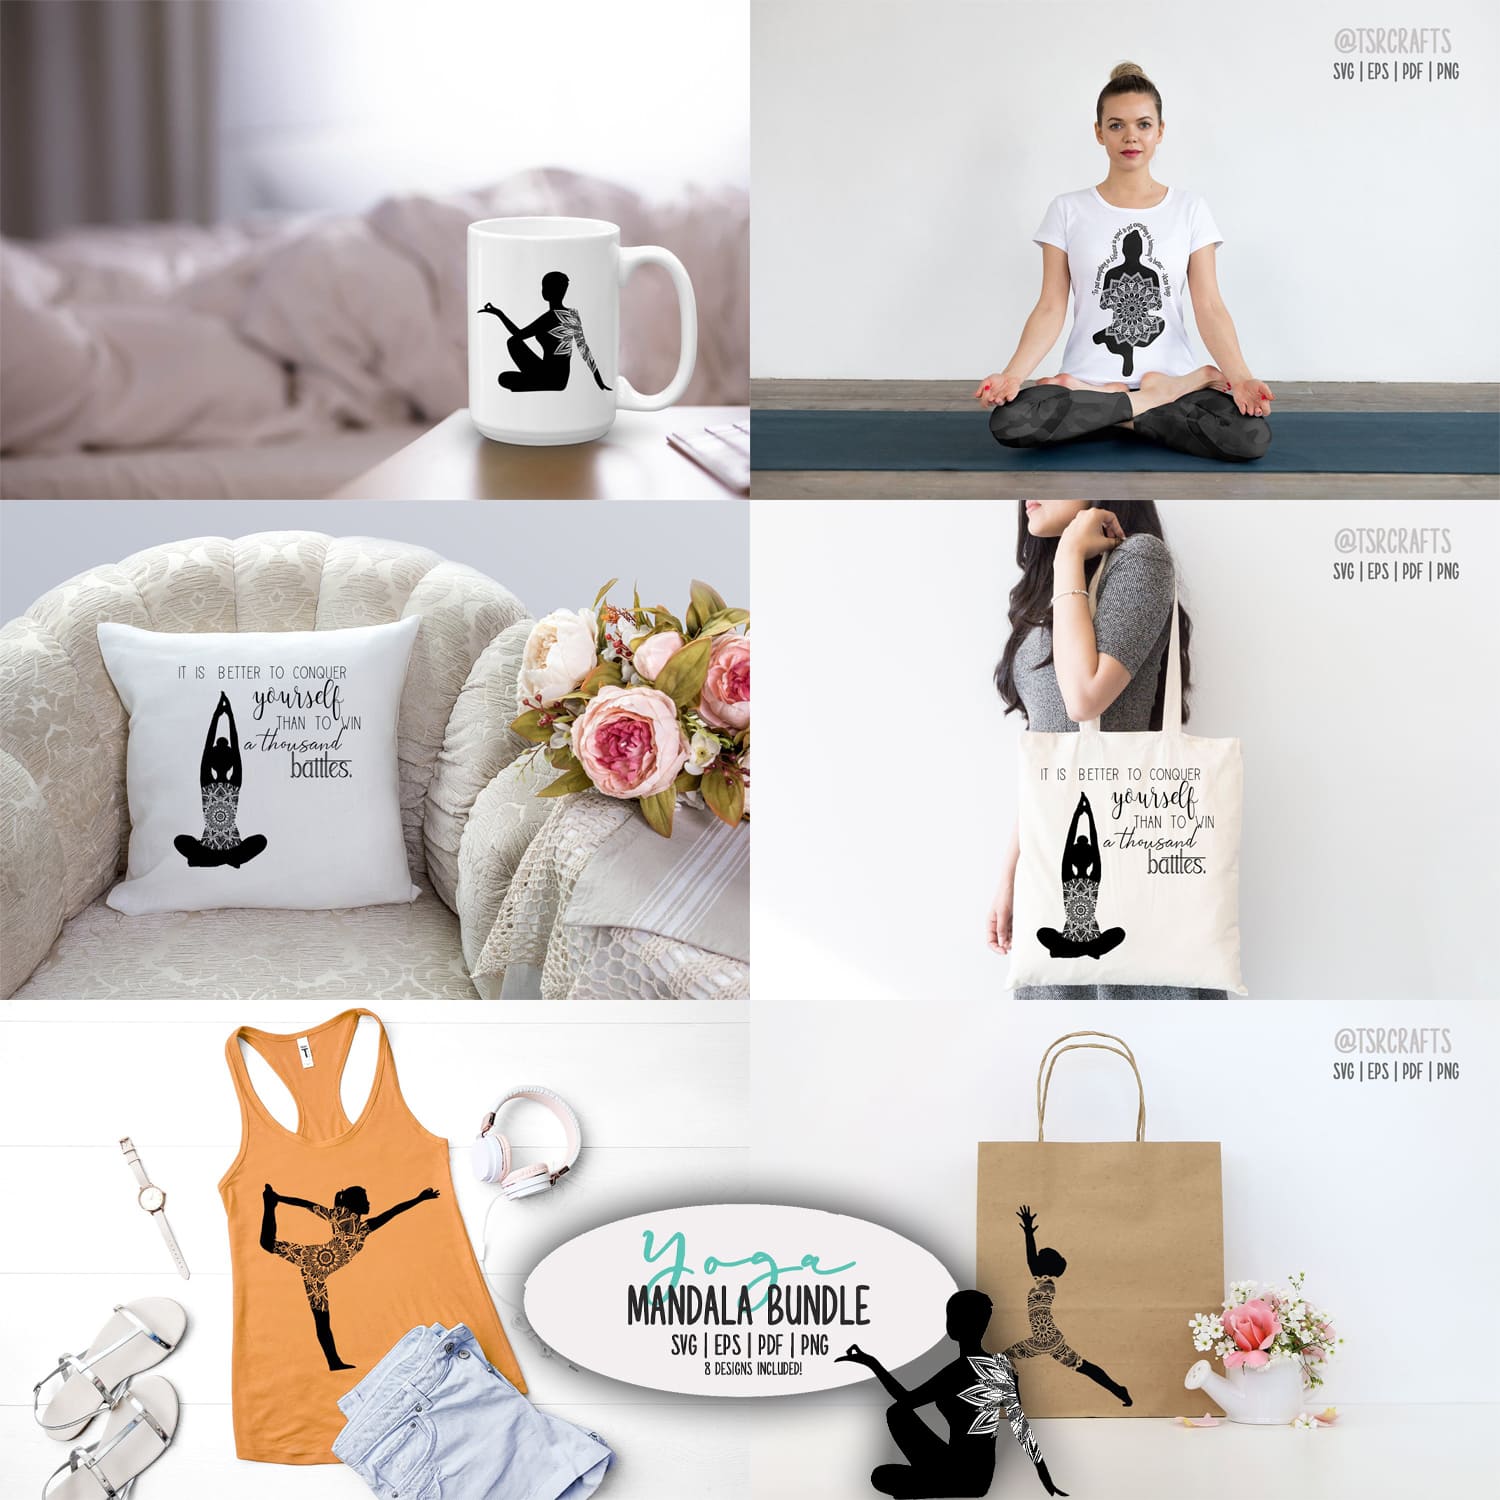 SVG bundle yoga and quote designs with mandala pat - main image preview.